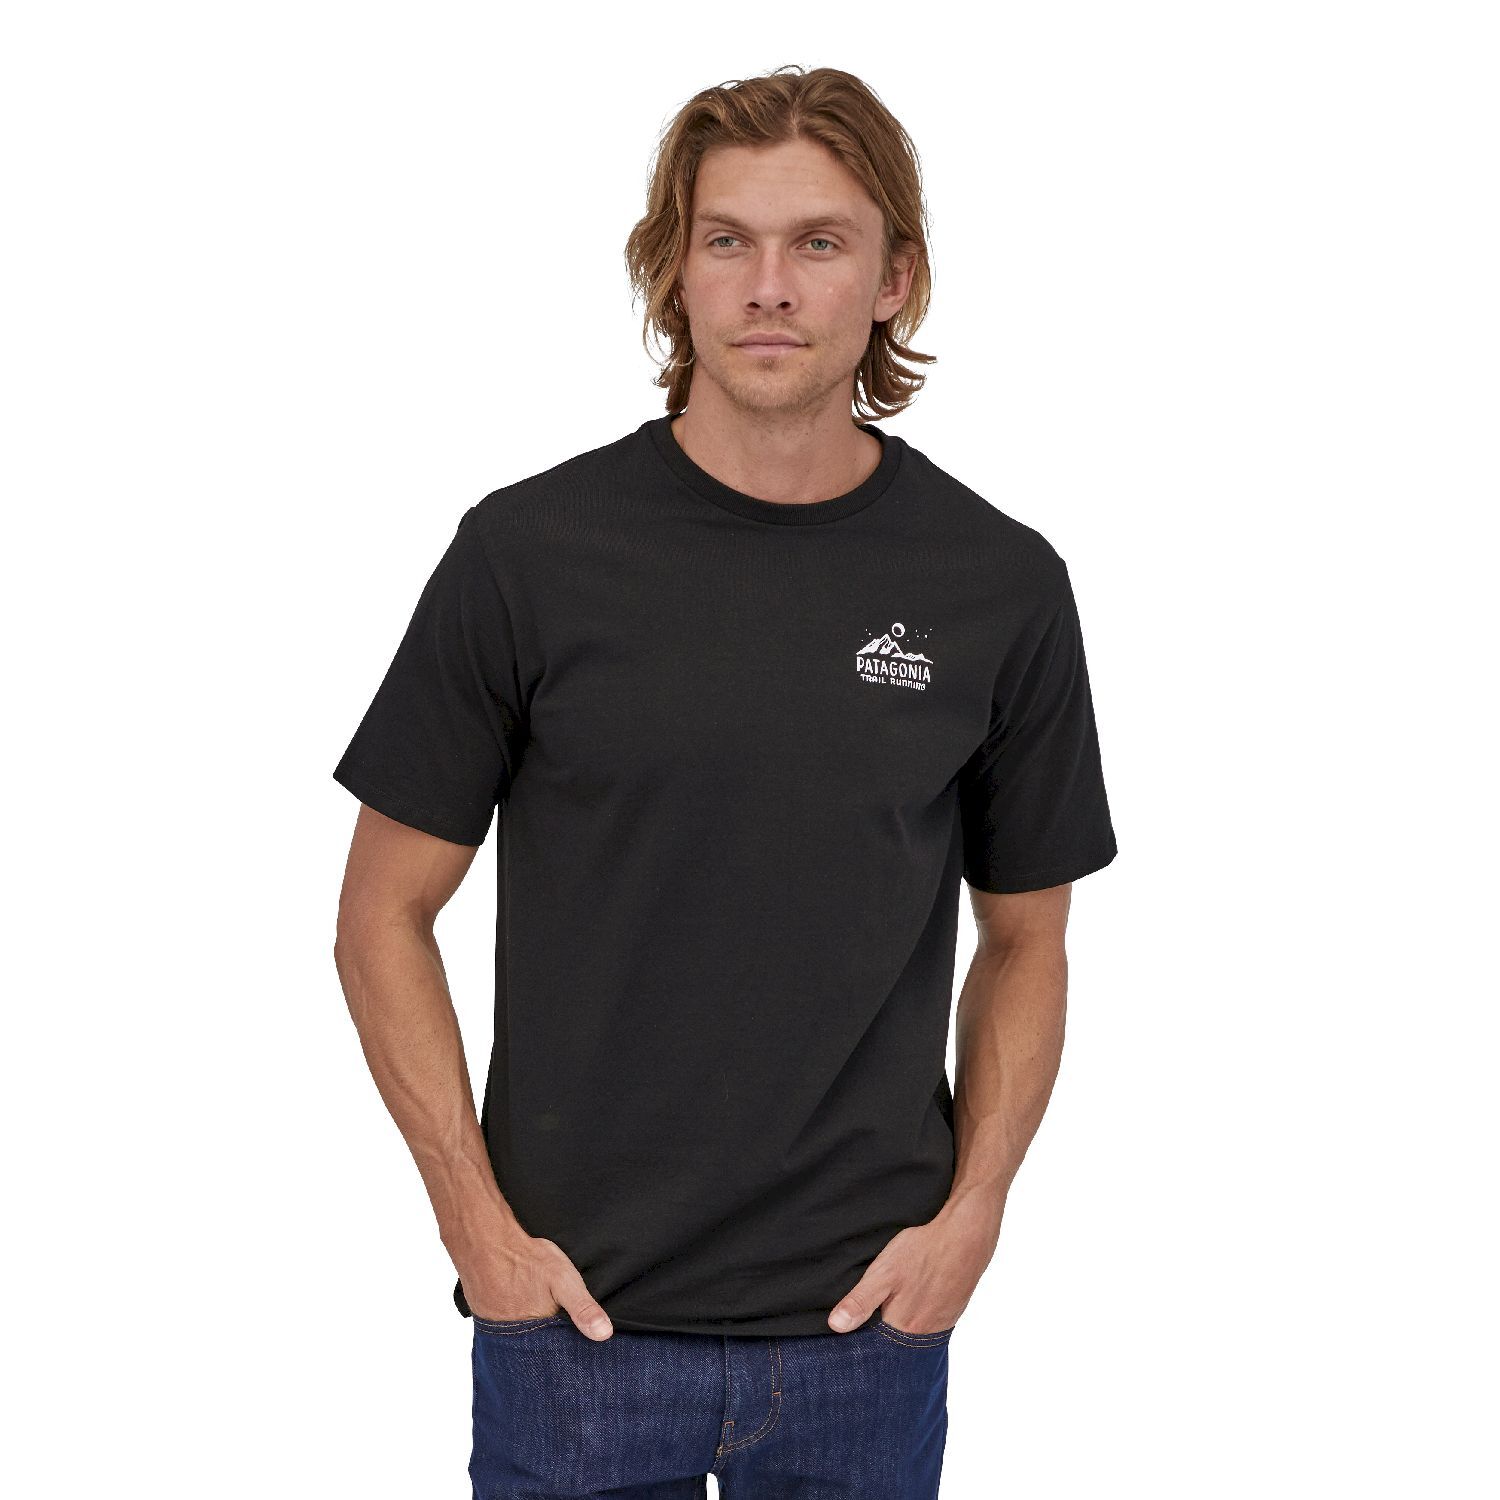 Patagonia Ridgeline Runner Responsibili-Tee - T-shirt - Men's